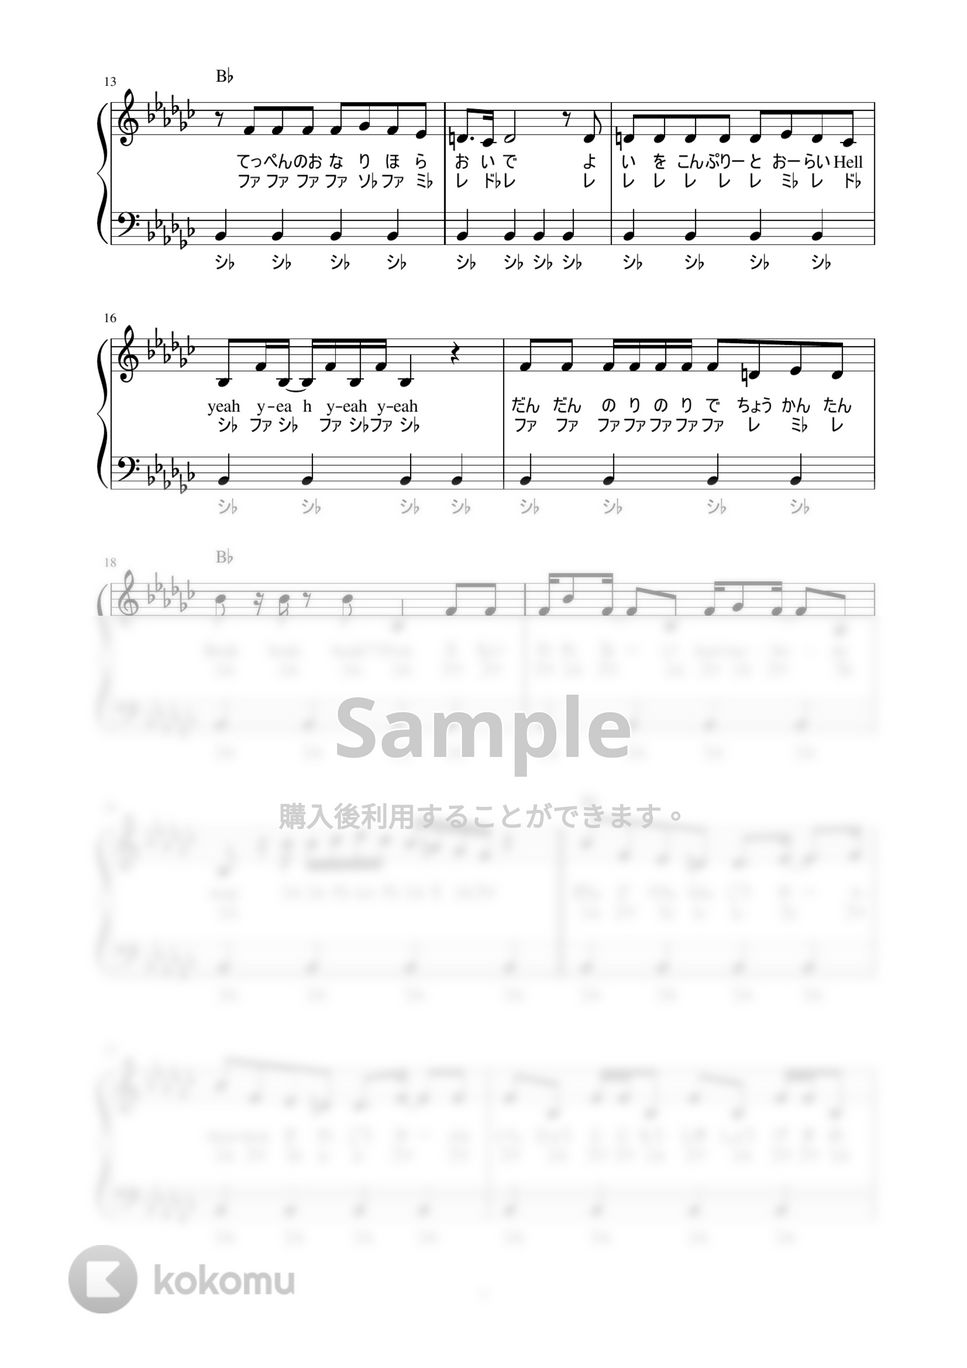 Ado - 唱 (かんたん / 歌詞付き / ドレミ付き / 初心者) by piano.tokyo